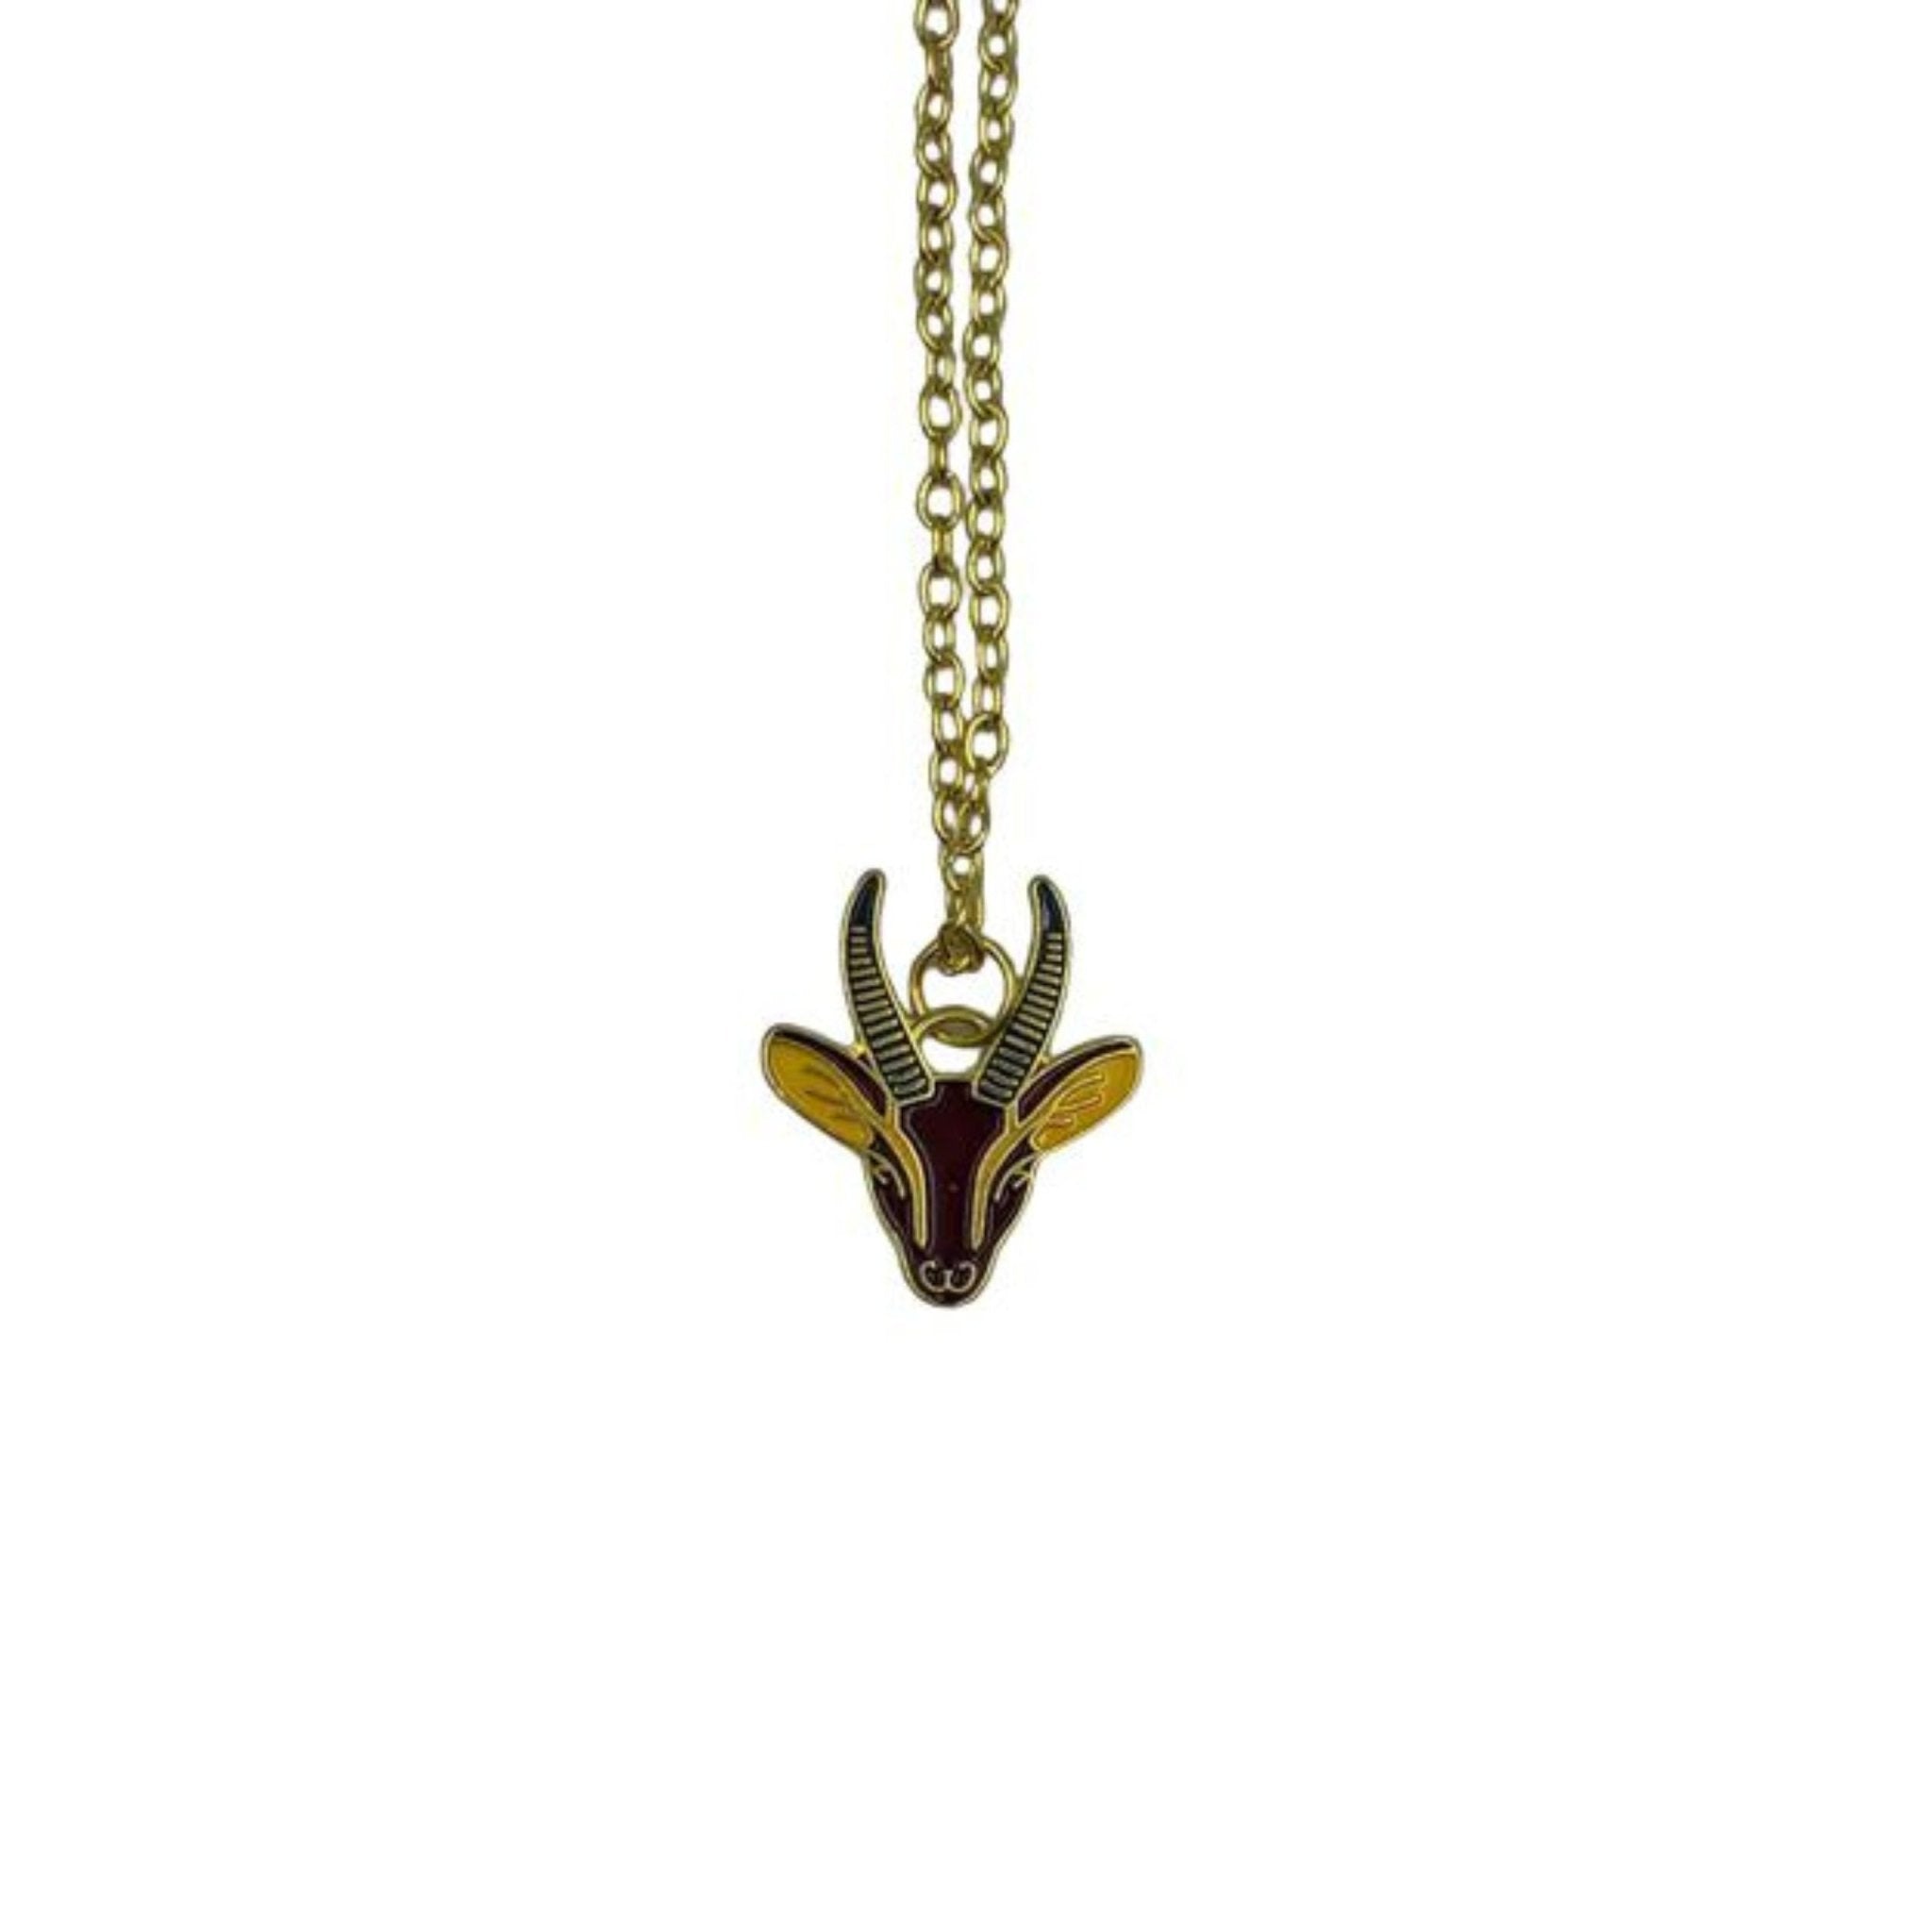 Chain Gazelle 1 - Gold